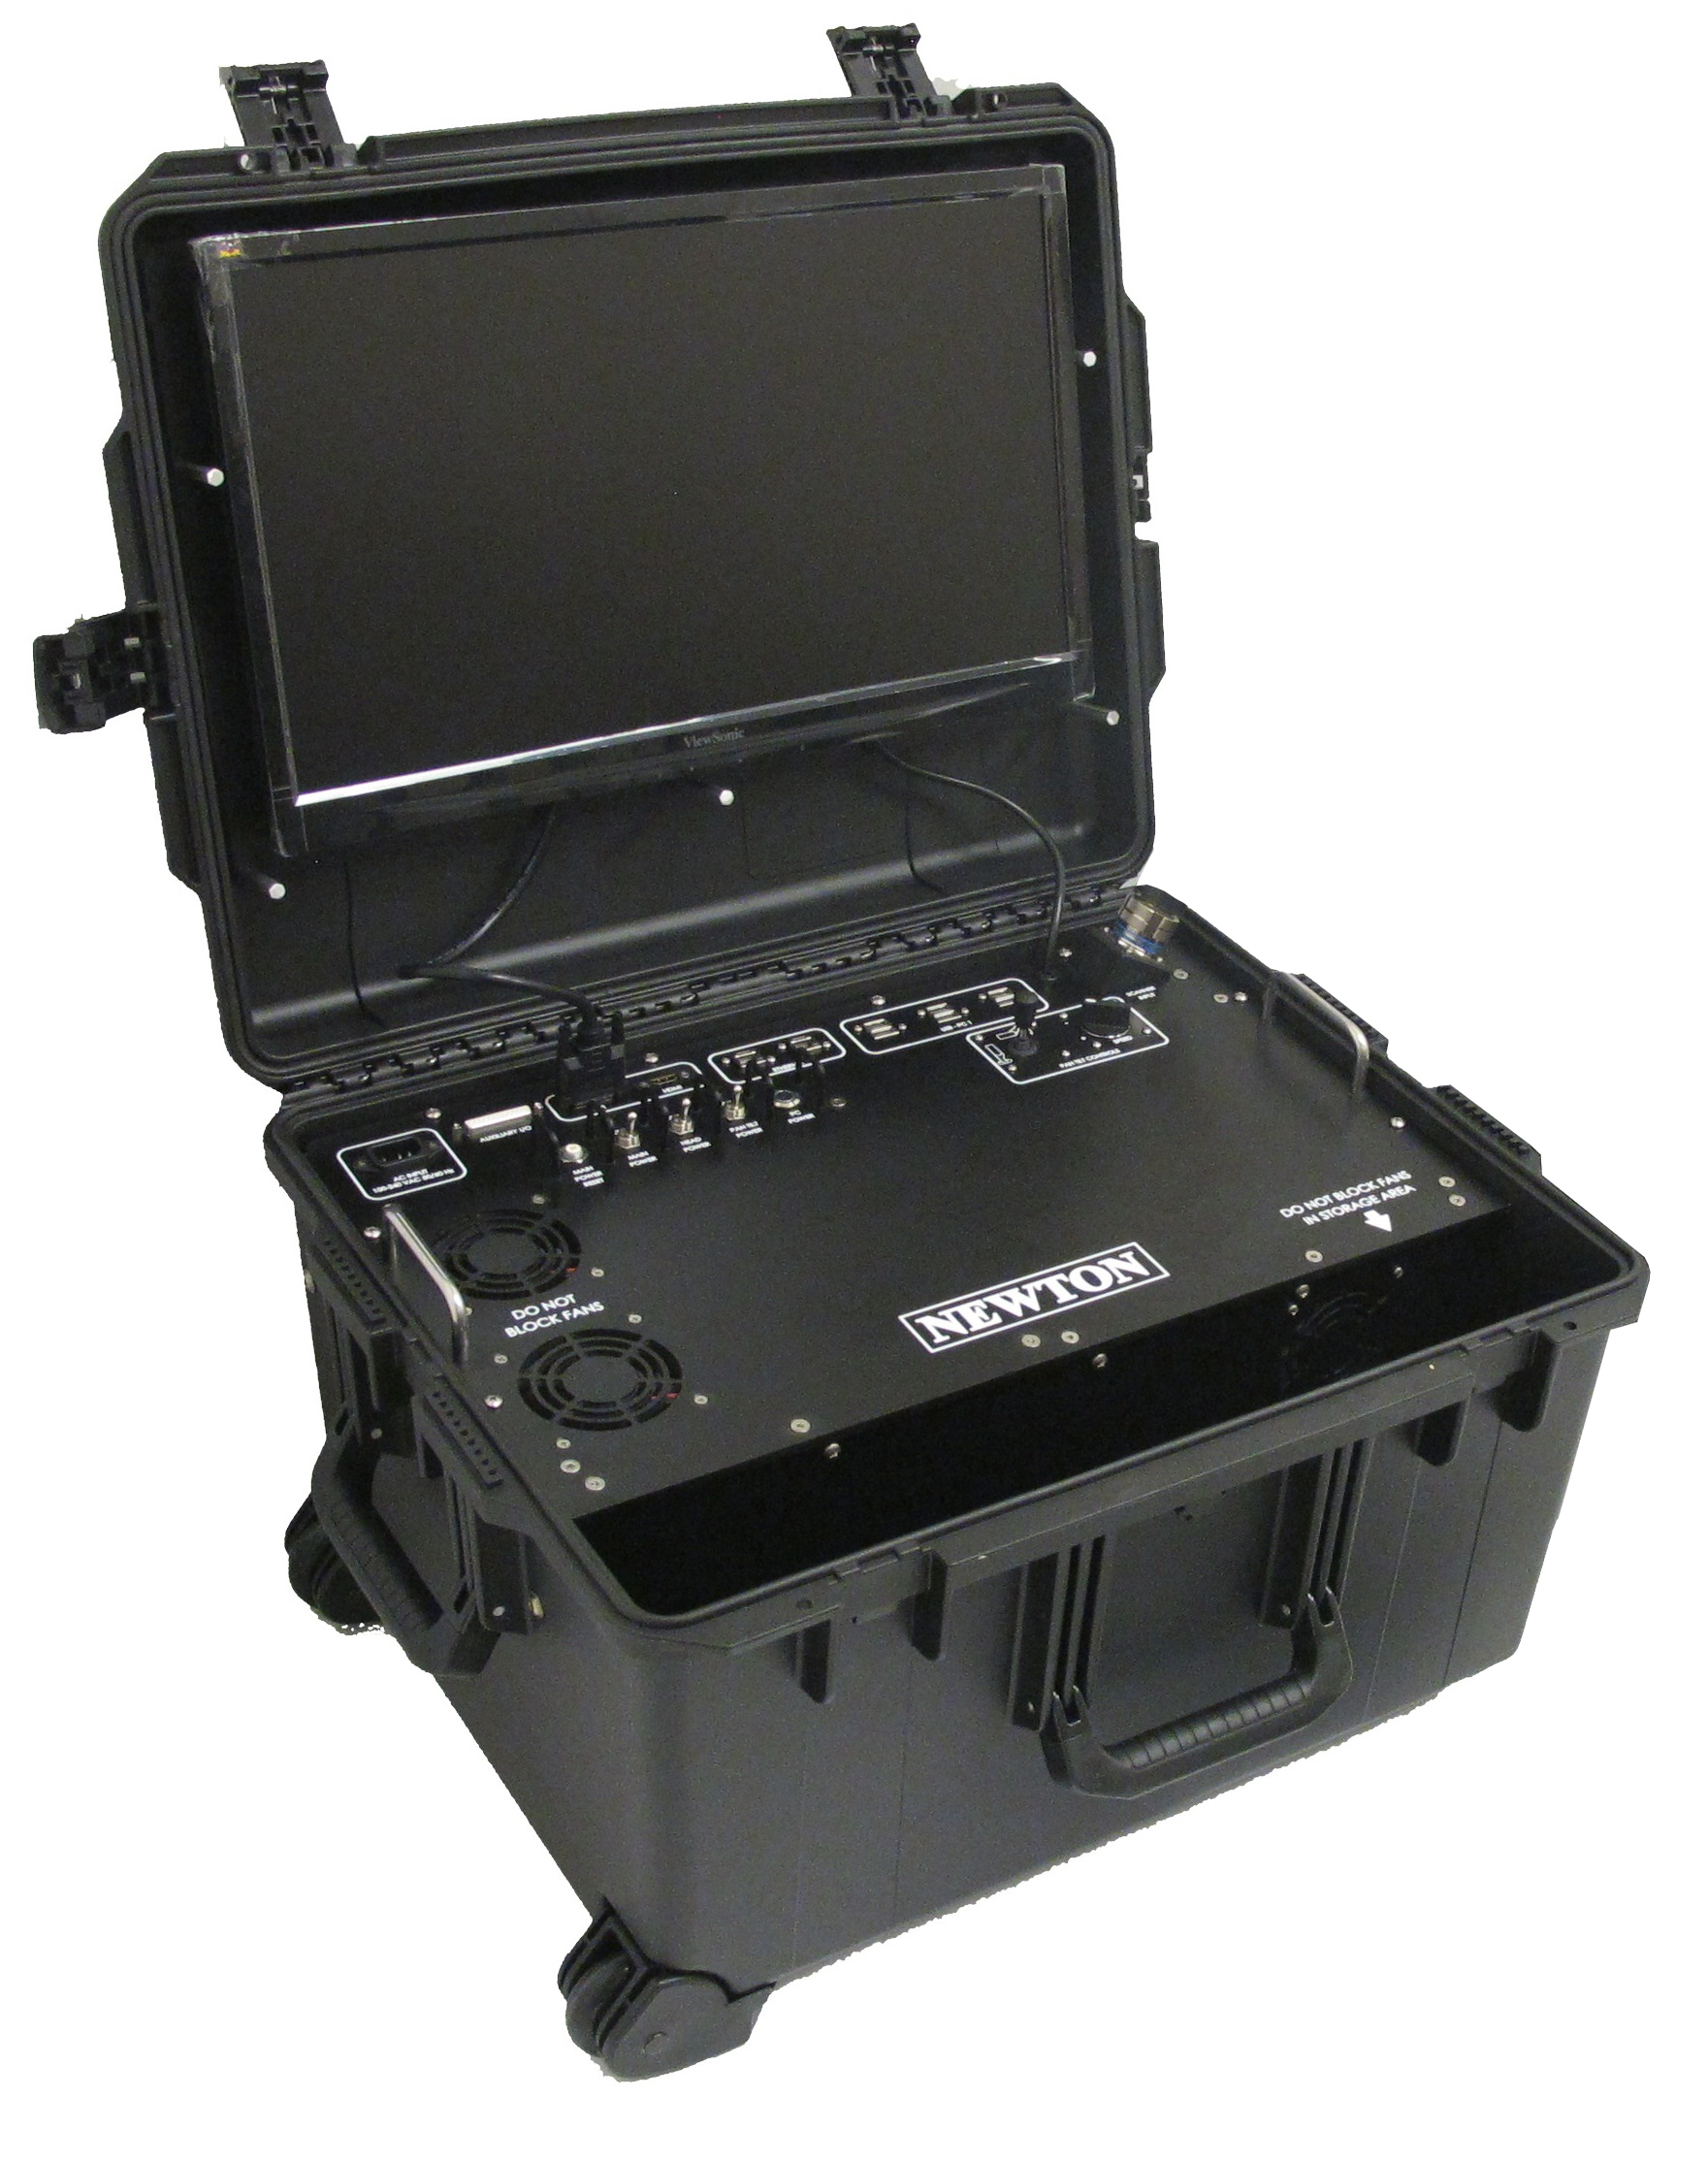 SW1000 control console